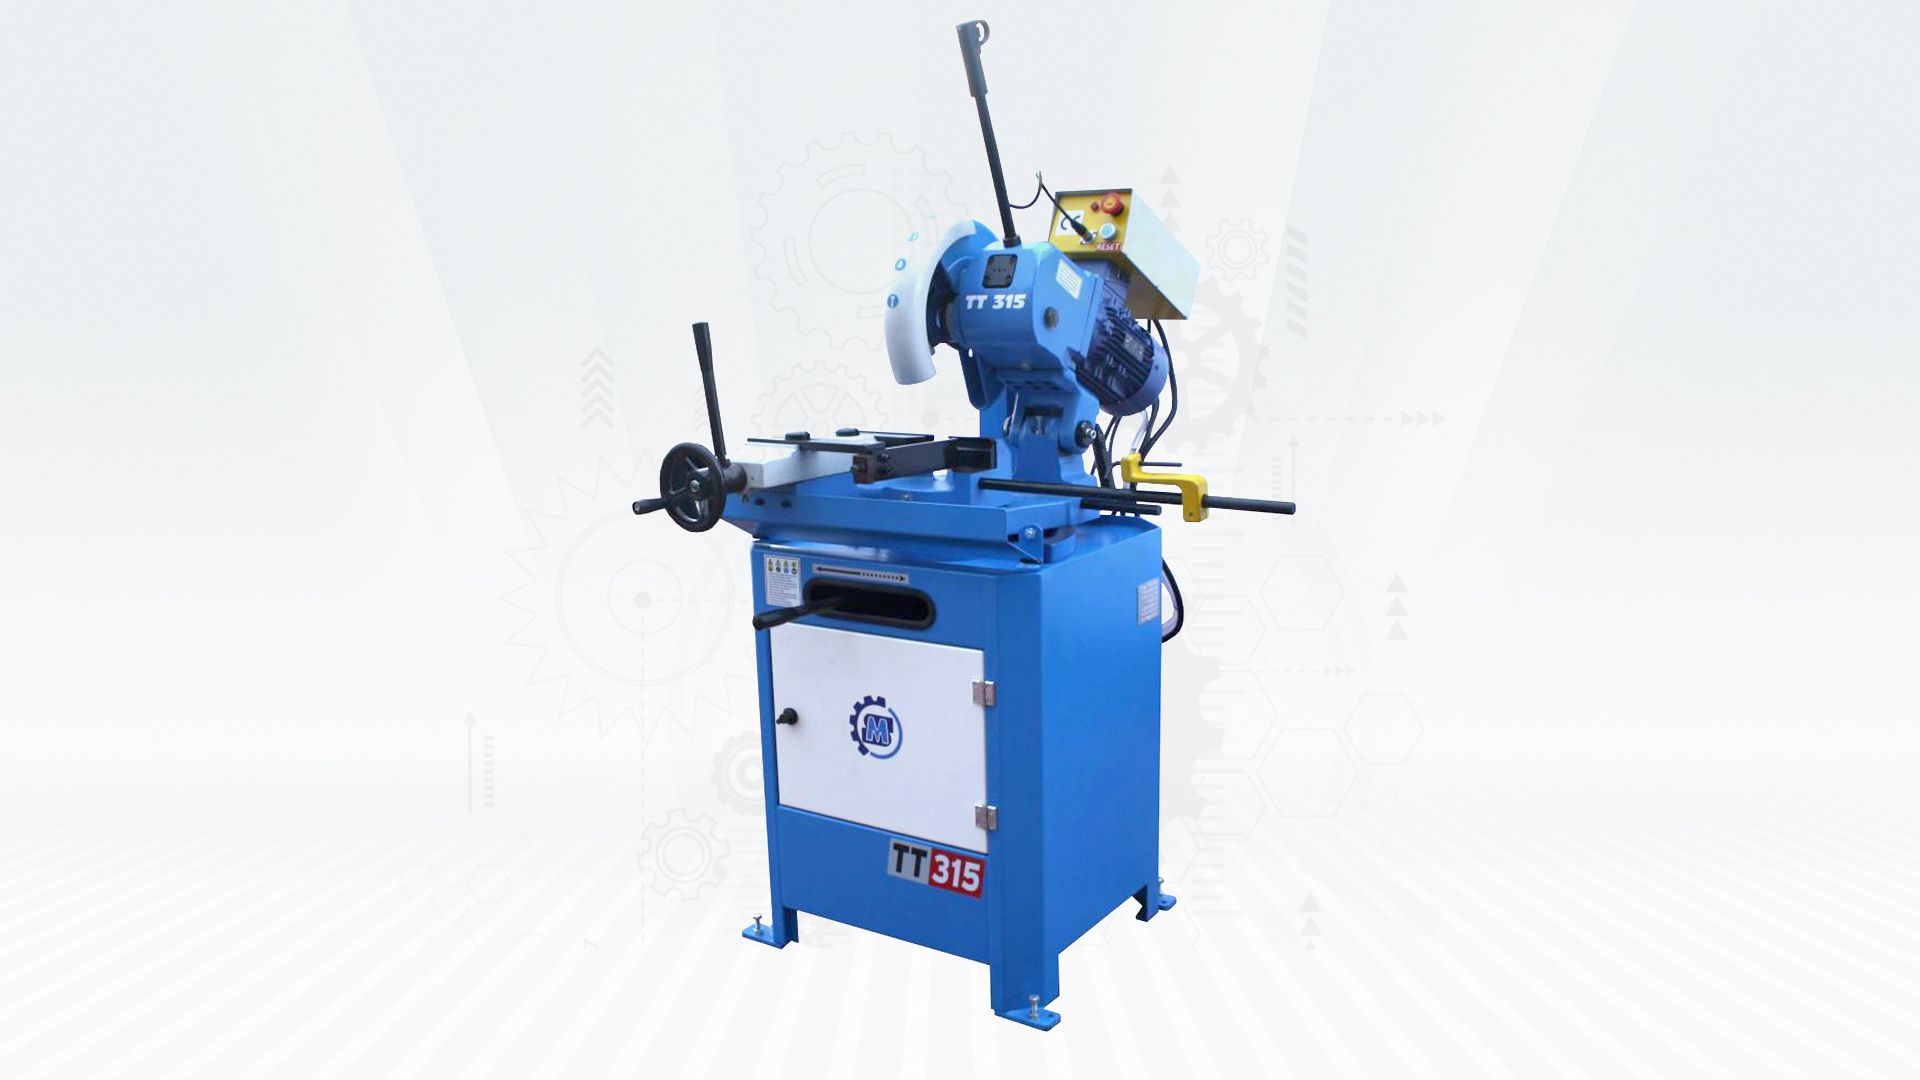 PVC CUTTING MACHINES - Support Sheet Metal Cutting Machine